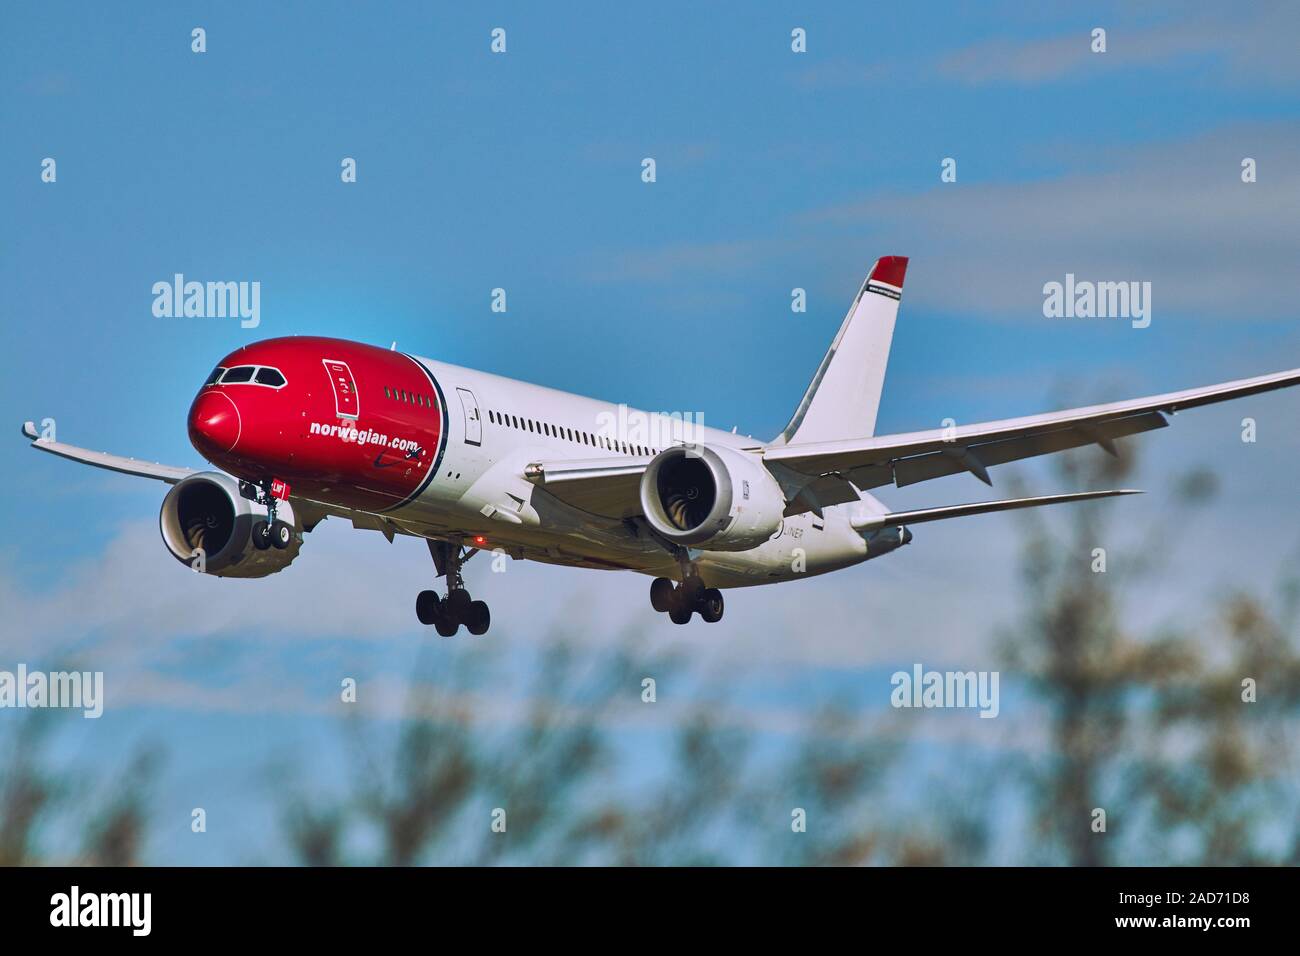 Norwegian landing at LEBL Airport (Josep Tarradellas - El Prat Barcelona) Stock Photo